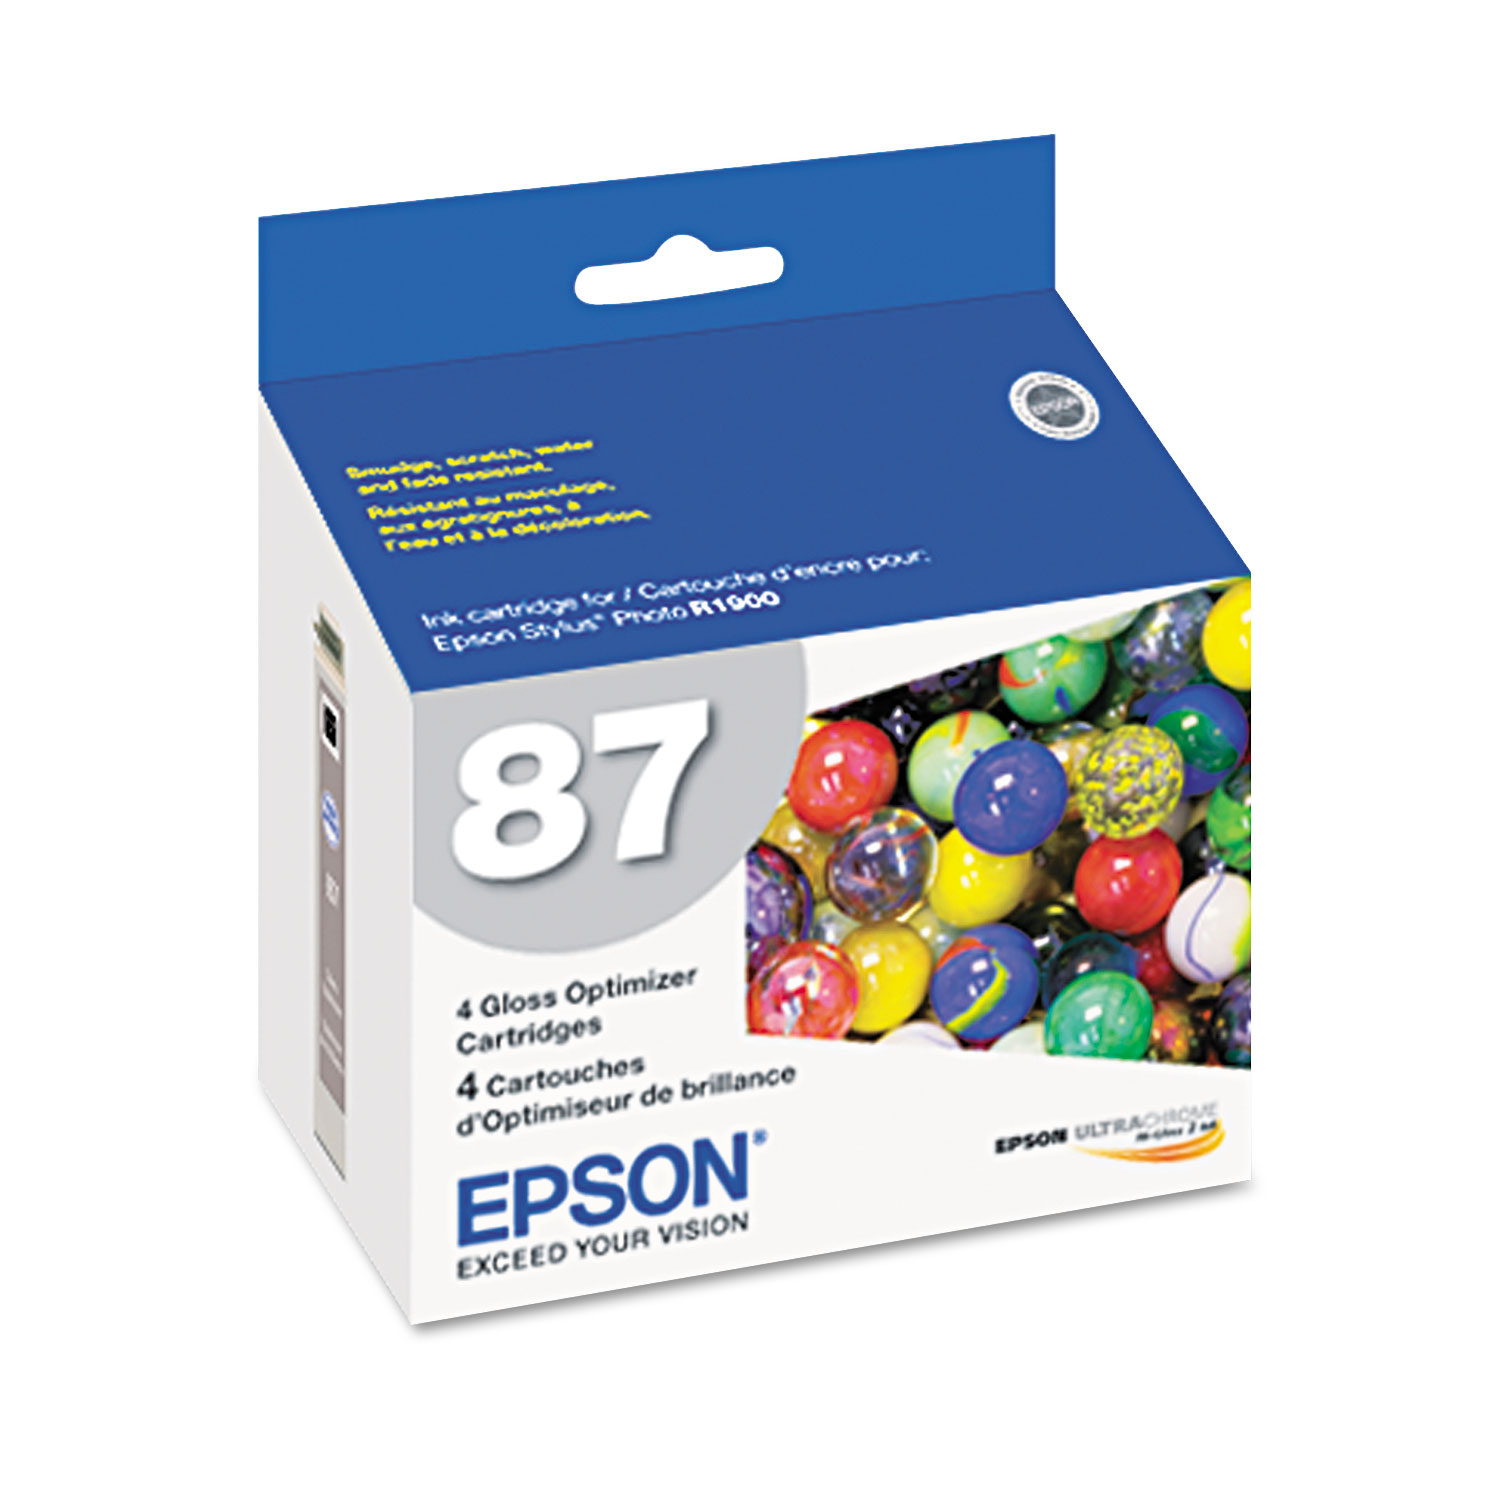  Epson T087020 T087020 (87) UltraChrome Hi-Gloss 2 Gloss Optimizer, Clear, 4/PK (EPST087020) 